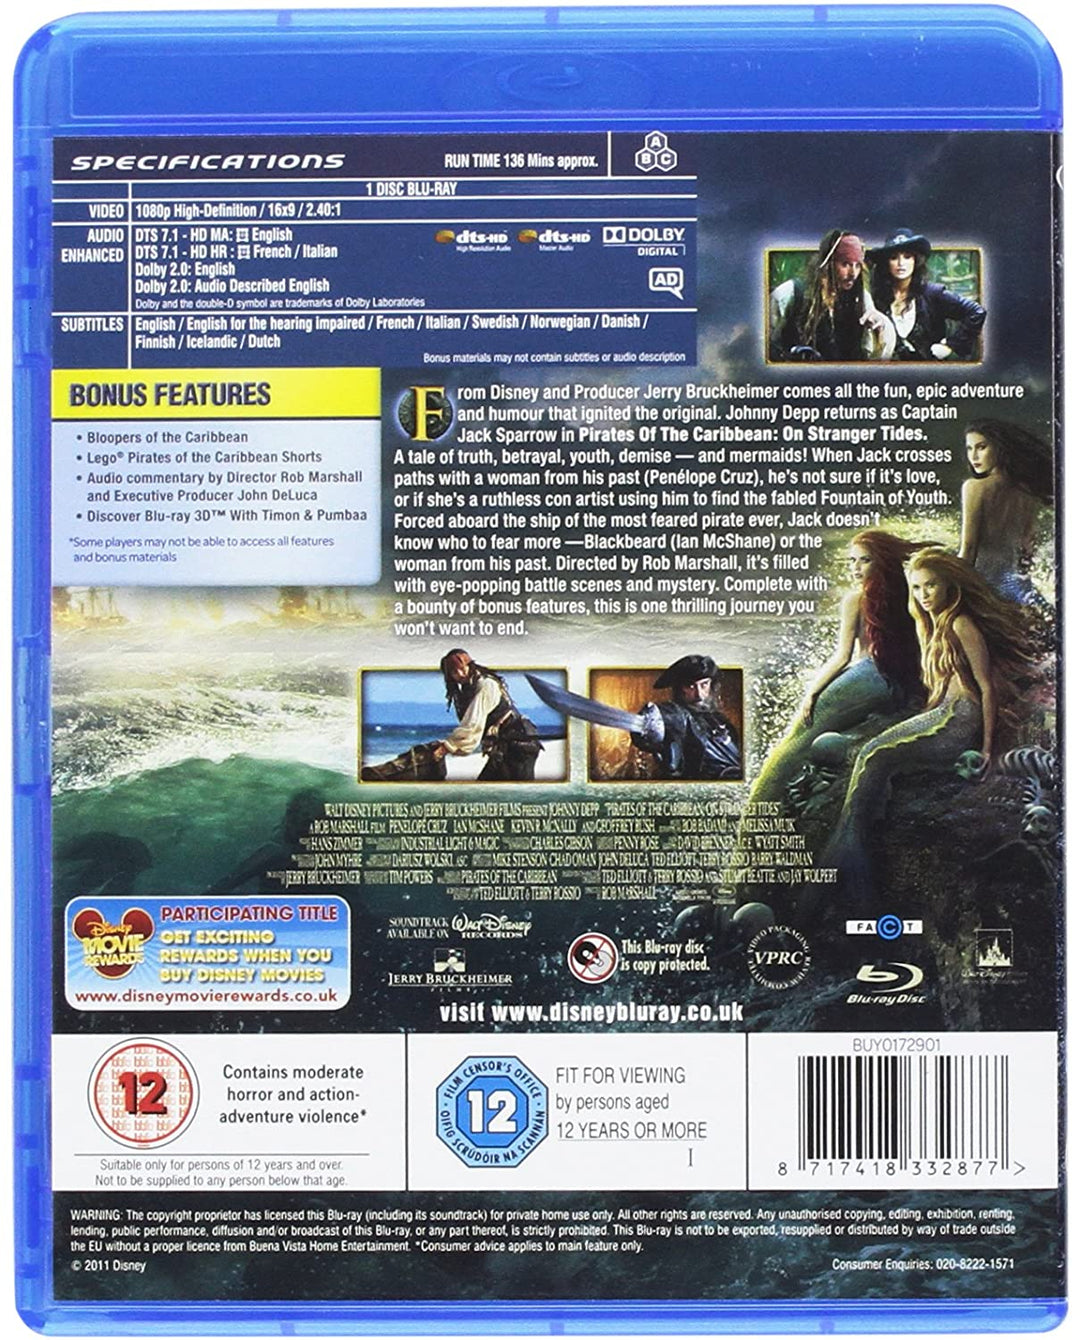 Pirates of the Caribbean: On Stranger Tides [Blu-ray] [2017] [Regio vrij]